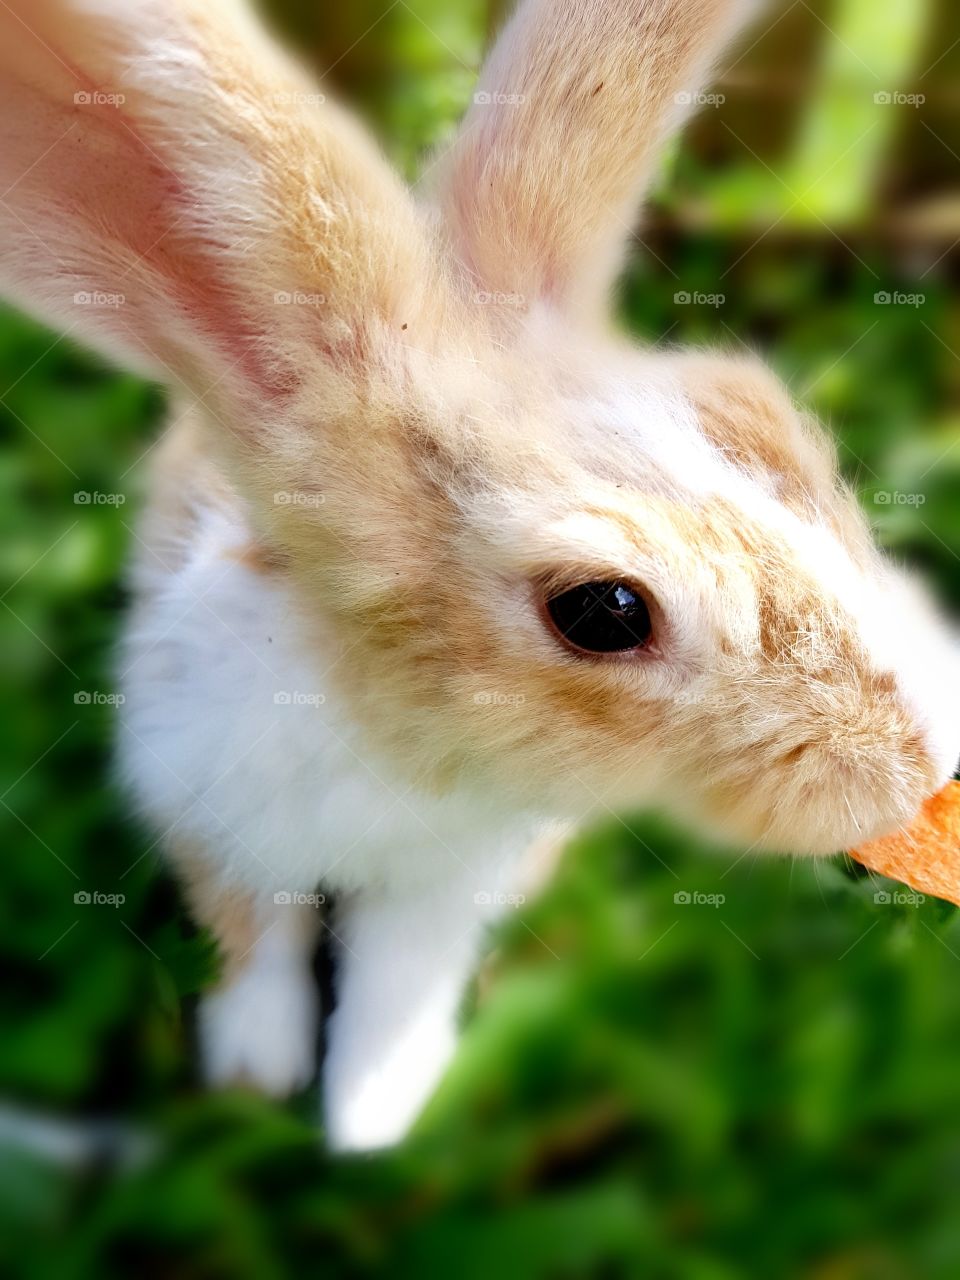 A cute Rabbit eating a Carrot!